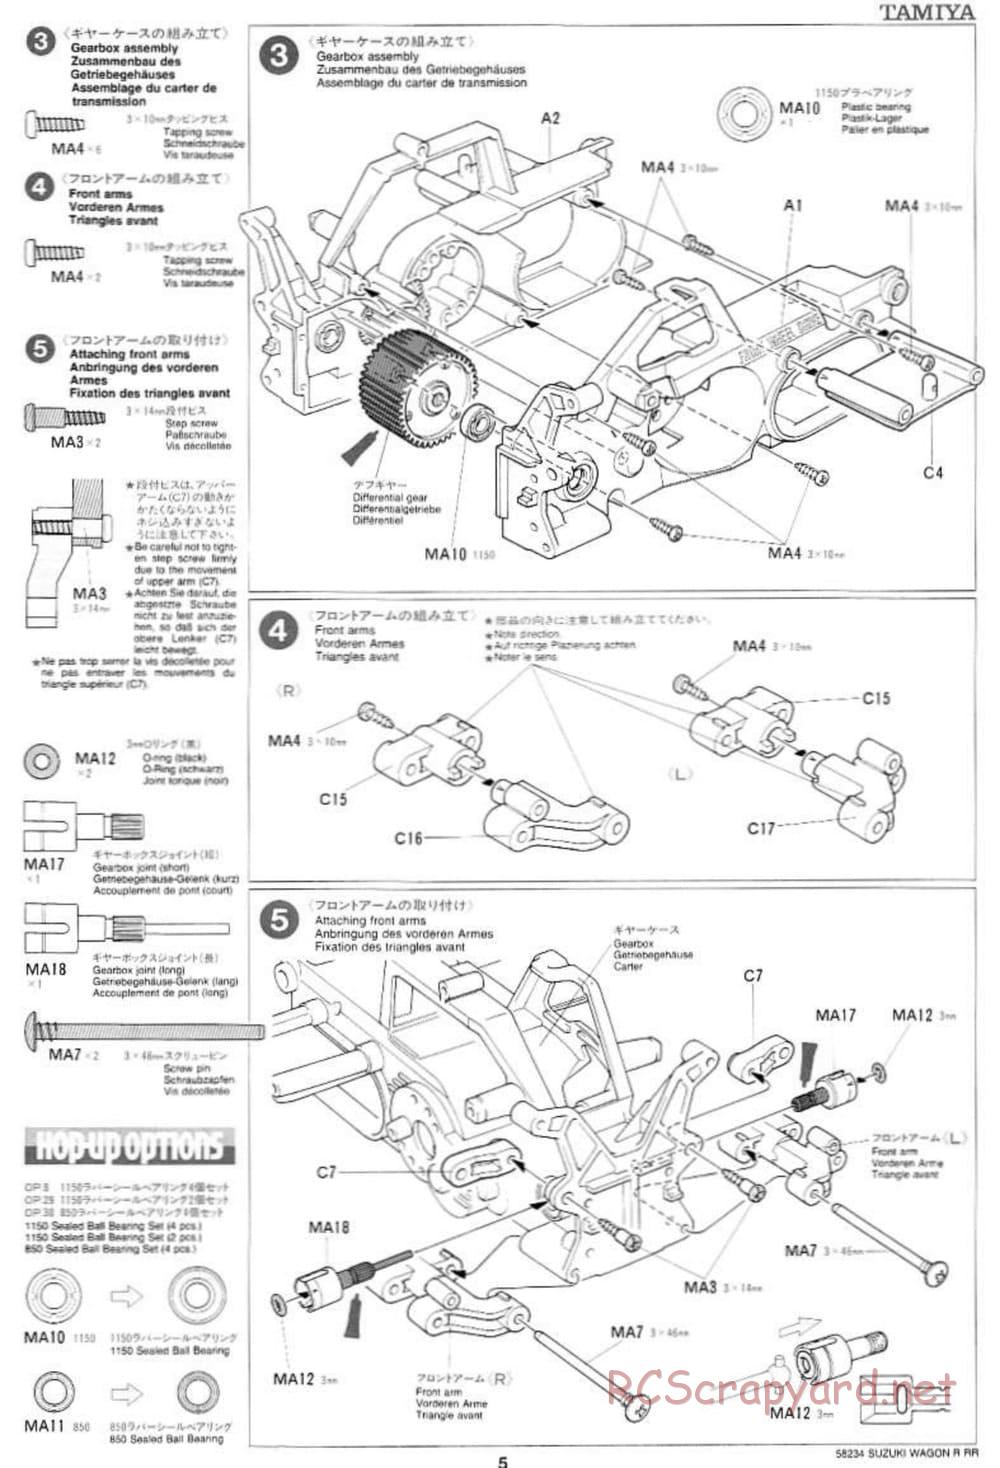 Tamiya - Suzuki WagonR-RR - M03 Chassis - Manual - Page 5